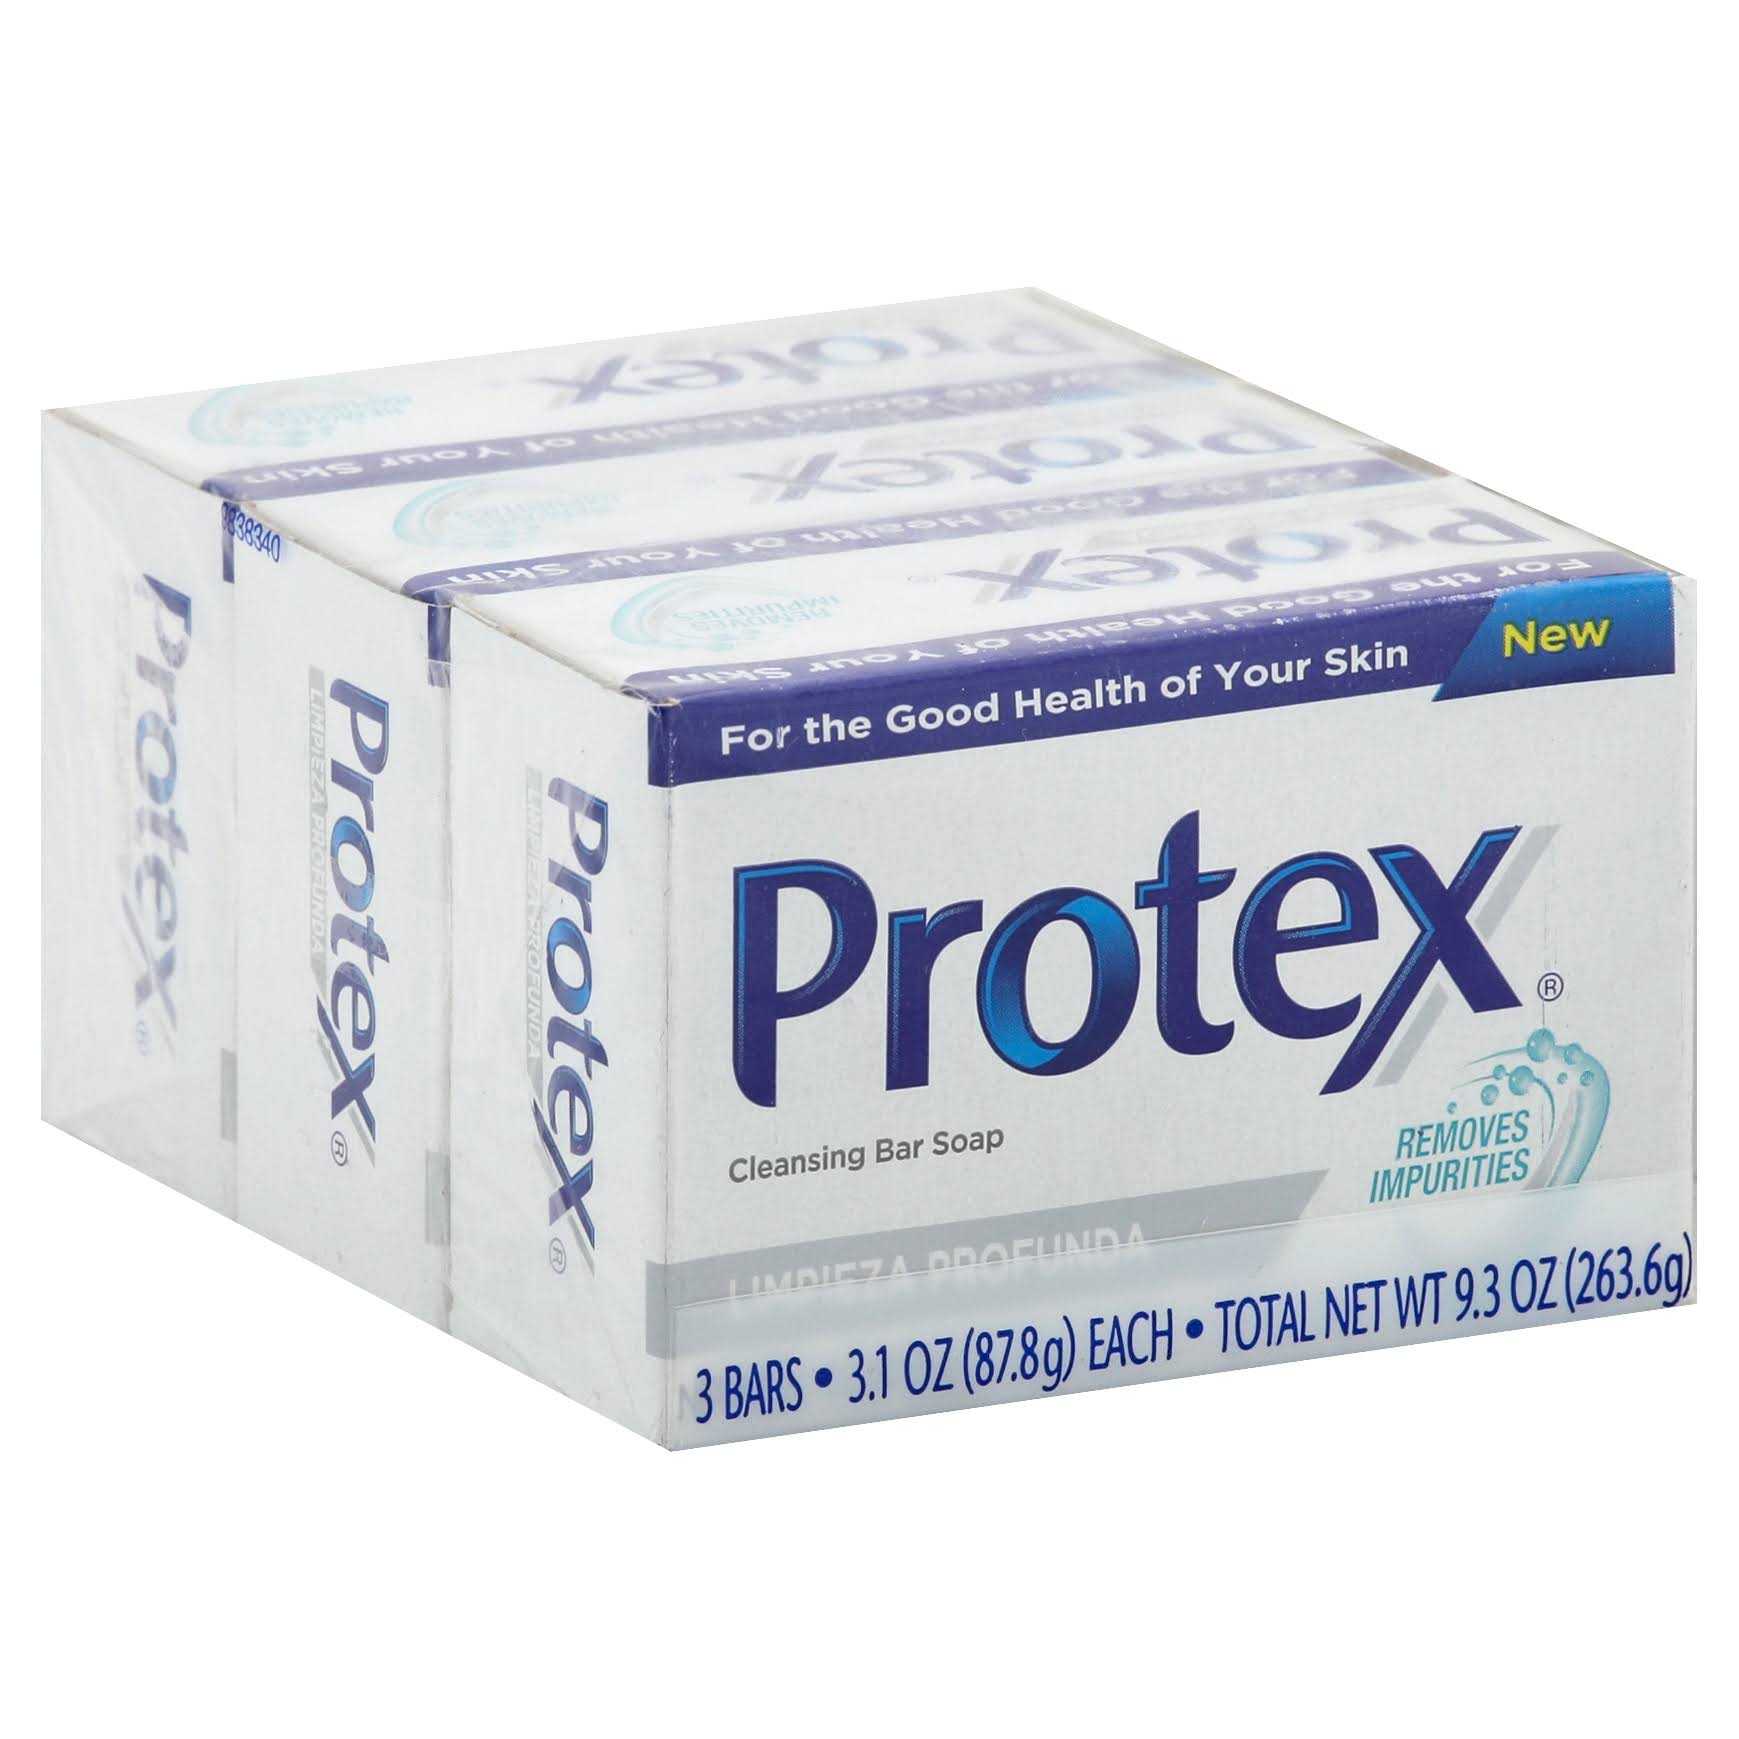 Protex Bar Soap, Cleansing, Limpieza Profunda - 3 pack, 3.1 oz bars